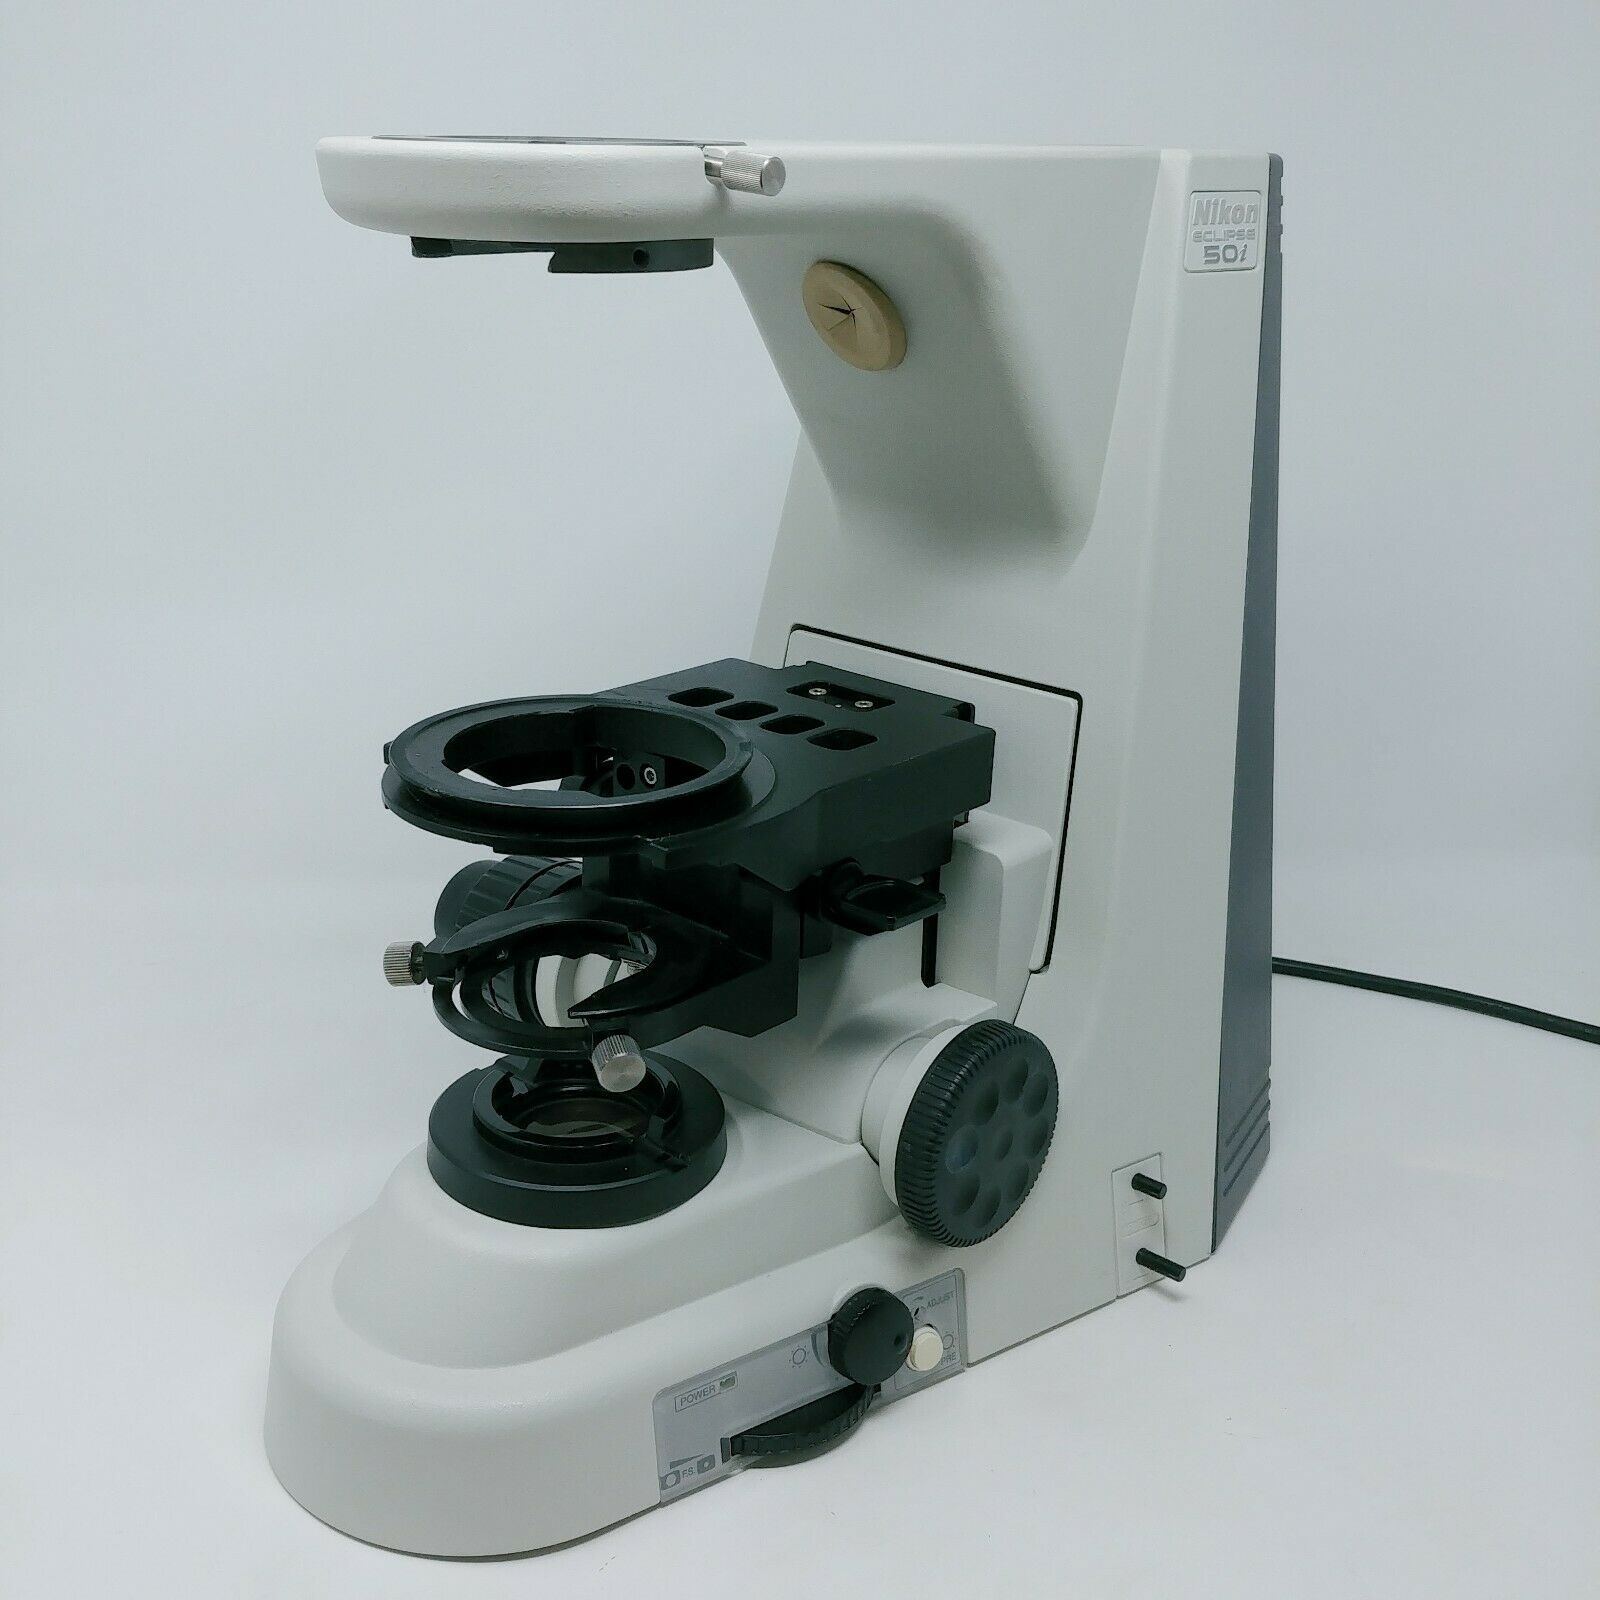 Nikon Штатив микроскопа Eclipse 50i 2